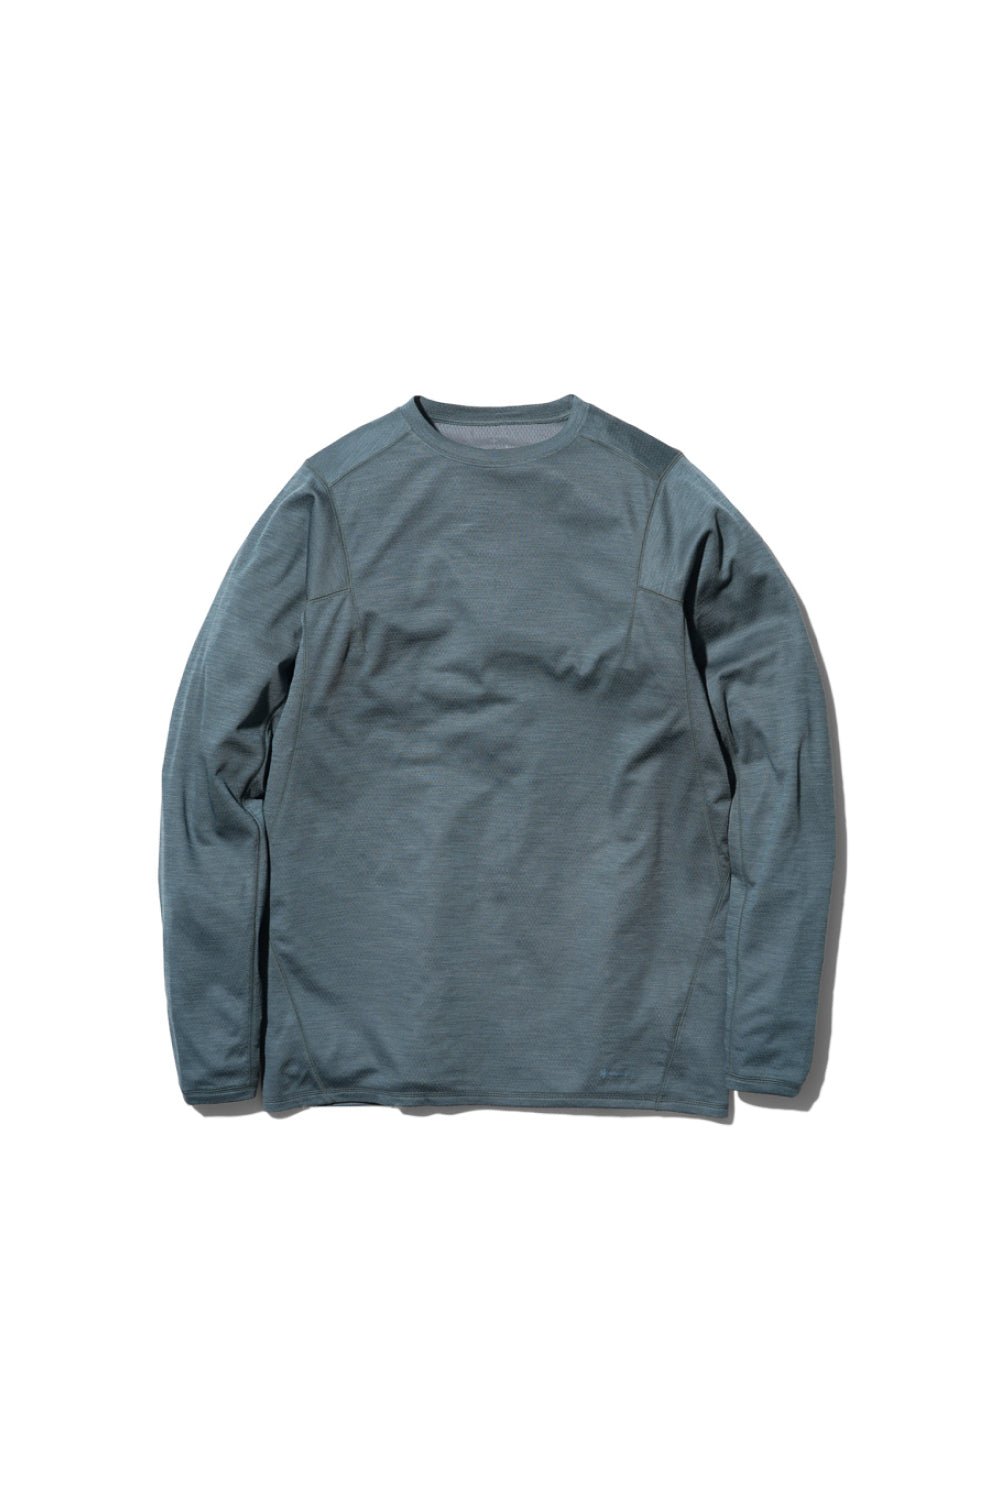 Snow Peak Recycled Polyester Wool Longsleeve T-Shirt - Slate Blue | Coffee Outdoors